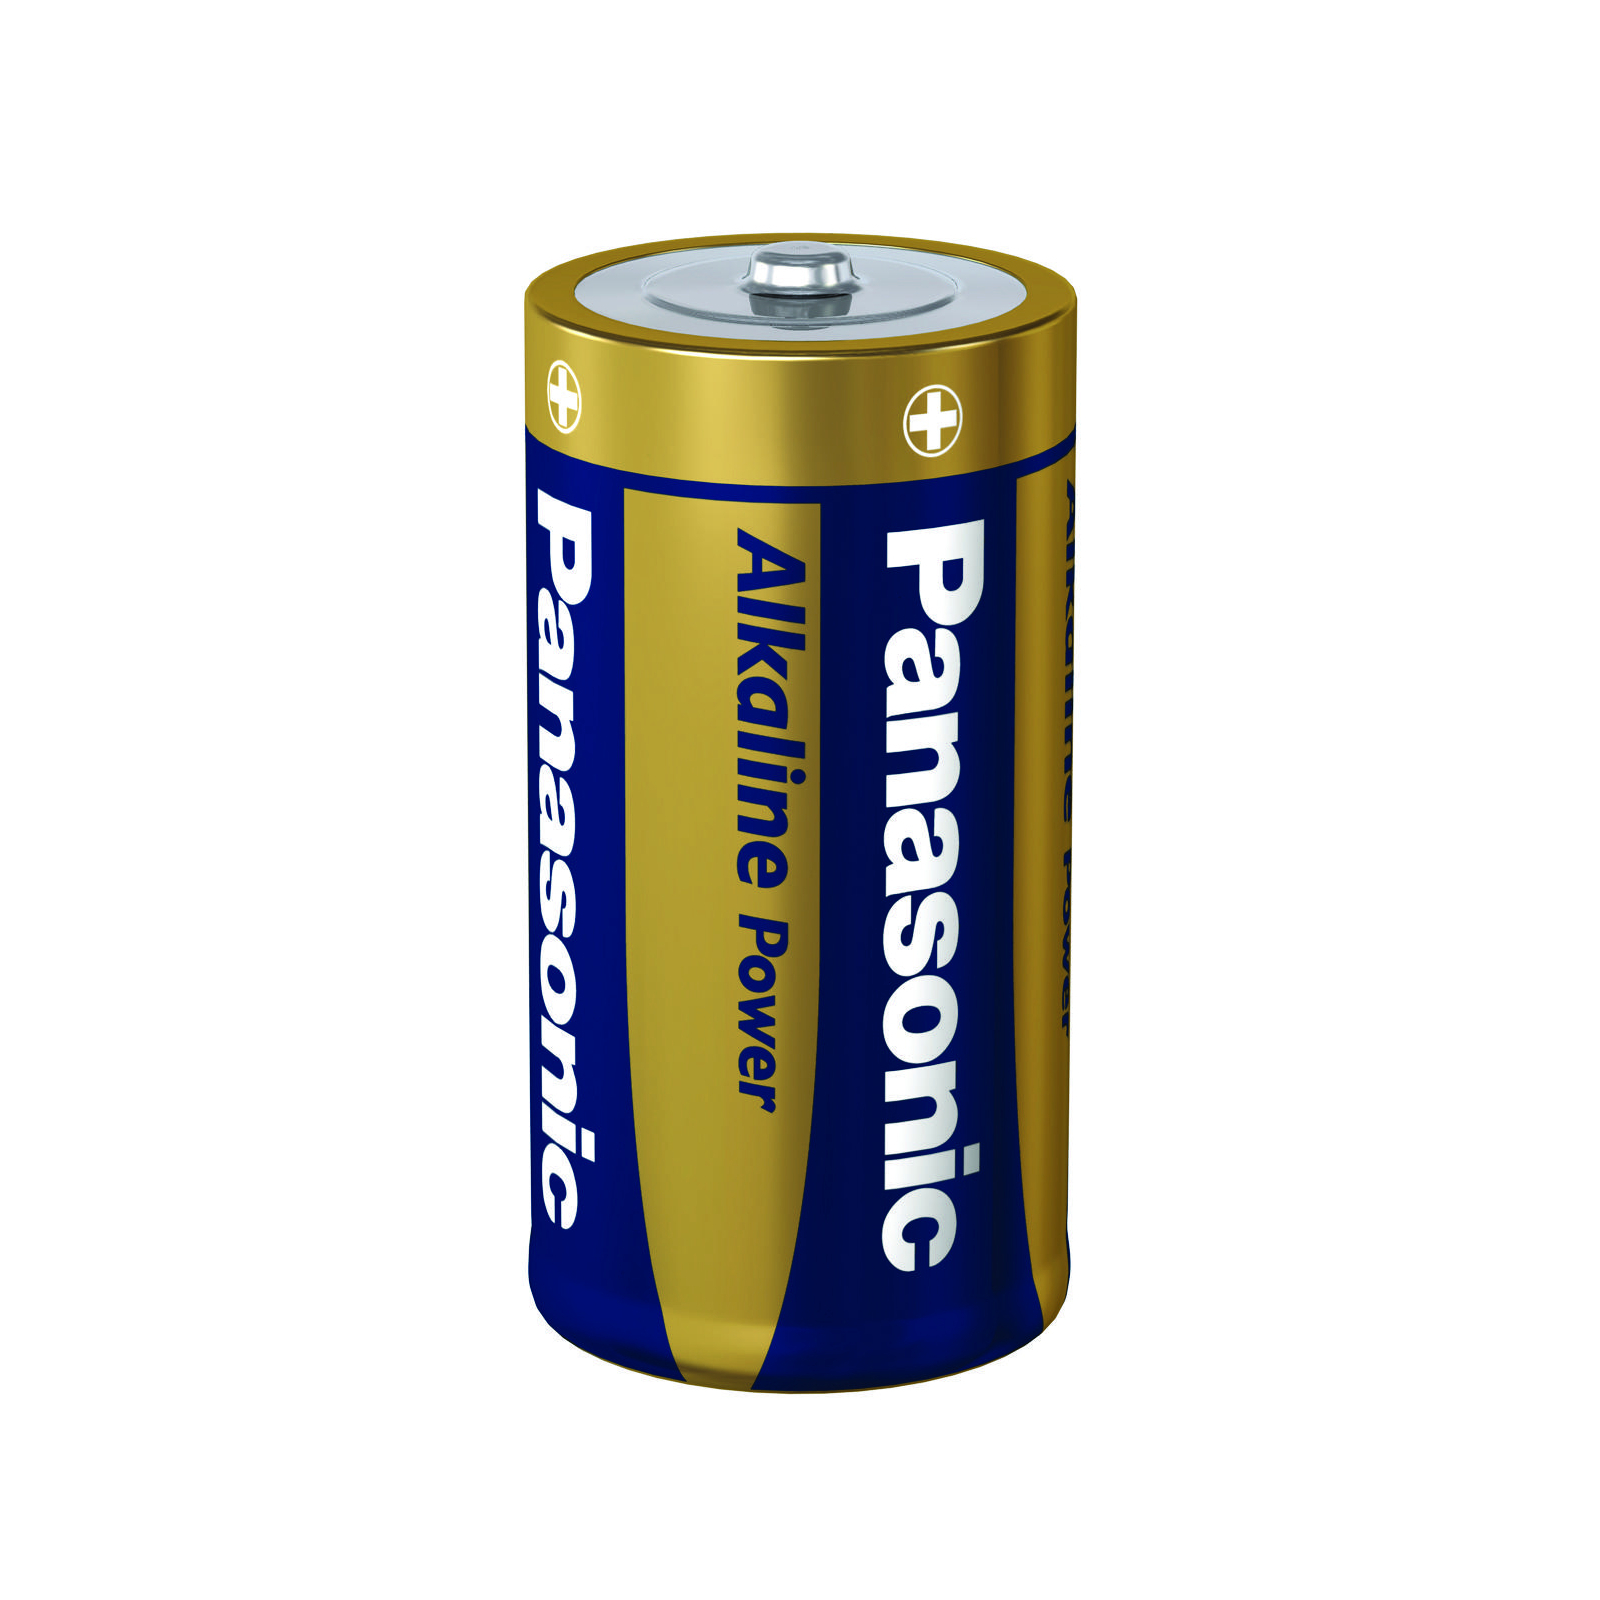 Батарейка Panasonic C LR14 Alkaline Power * 2 (LR14REB/2BP) изображение 2